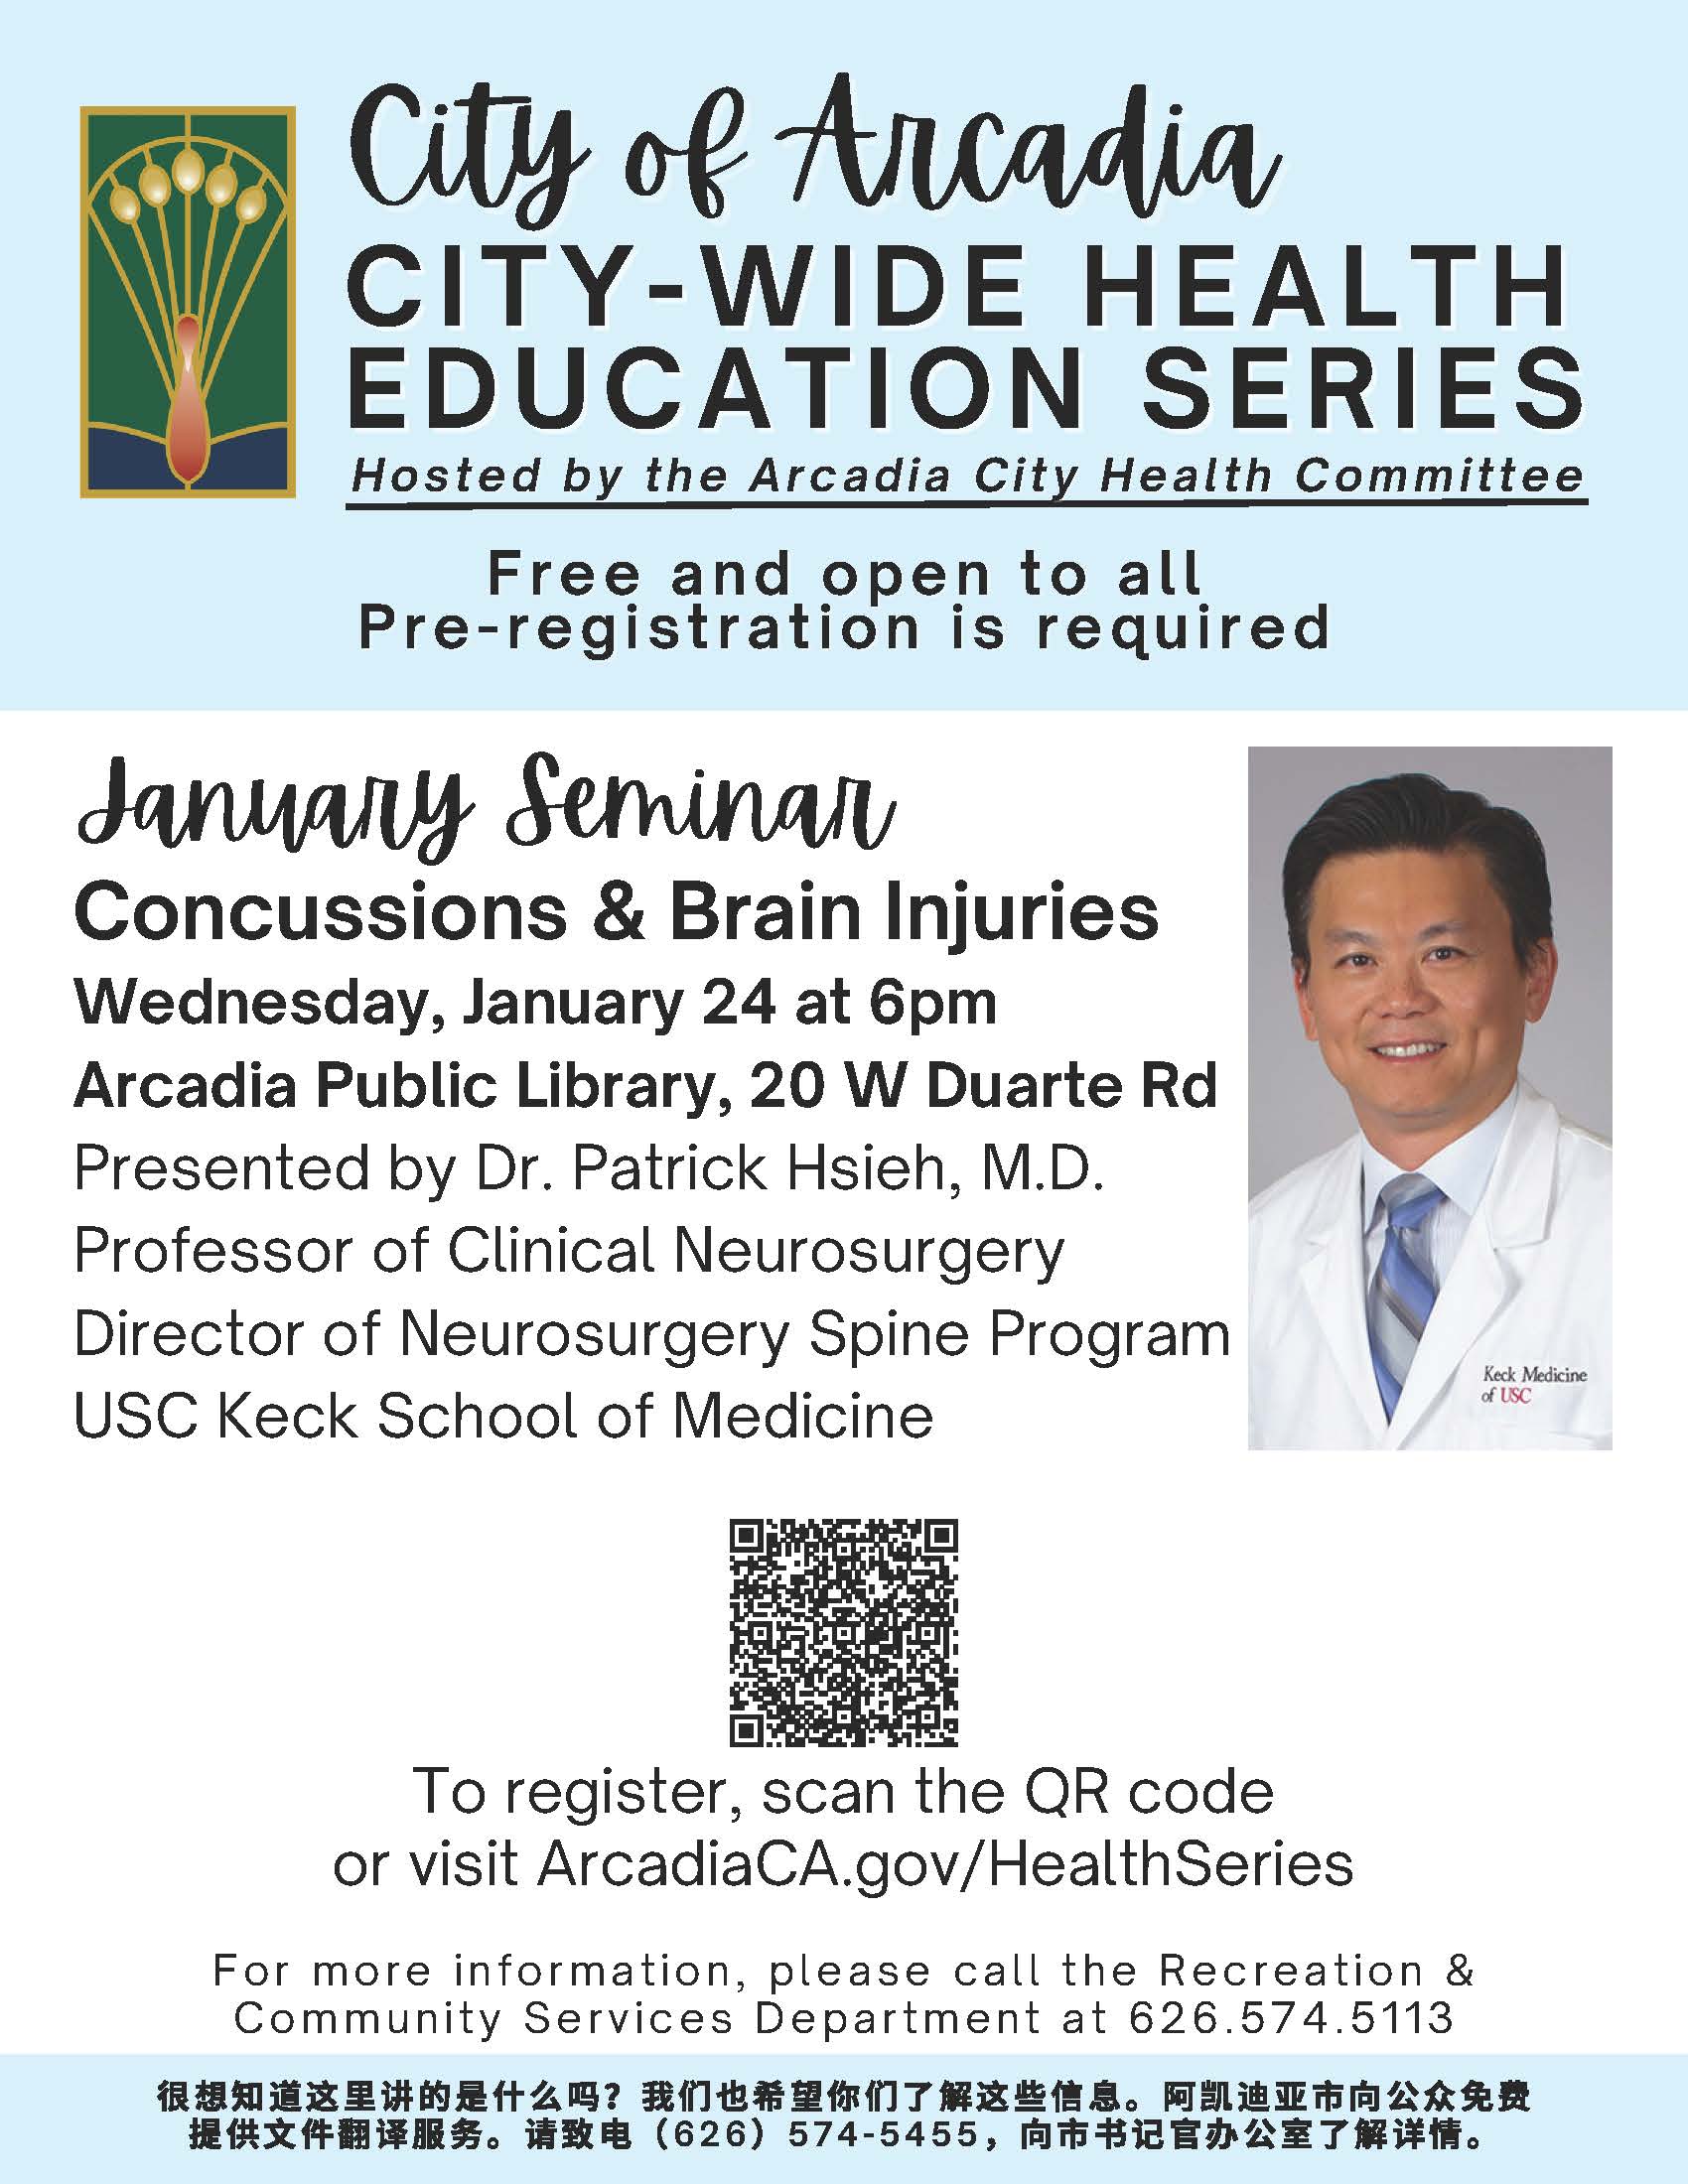 City of Arcadia health education series concussion and brain injury seminar 